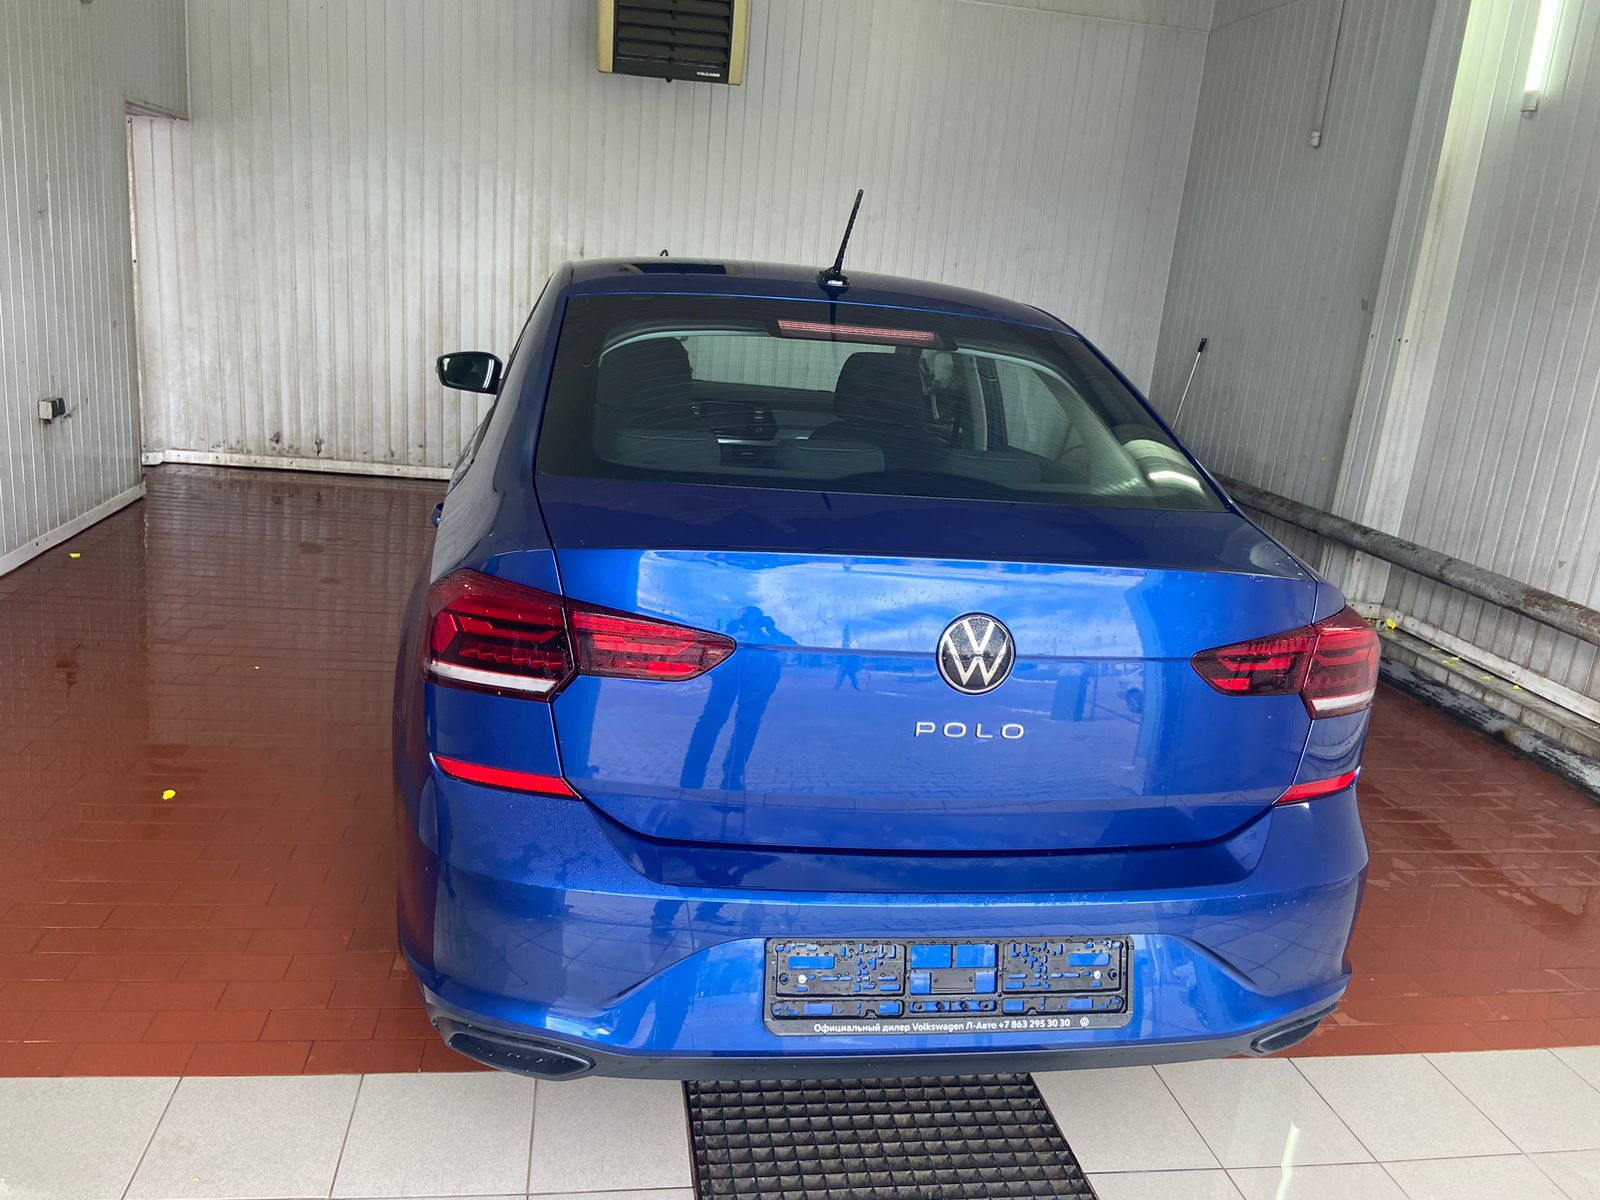 Volkswagen Polo 1.6 (110л.с.) 6-АКП. Status +Пакет «Зимний». Синий »Reef», металлик, 2022